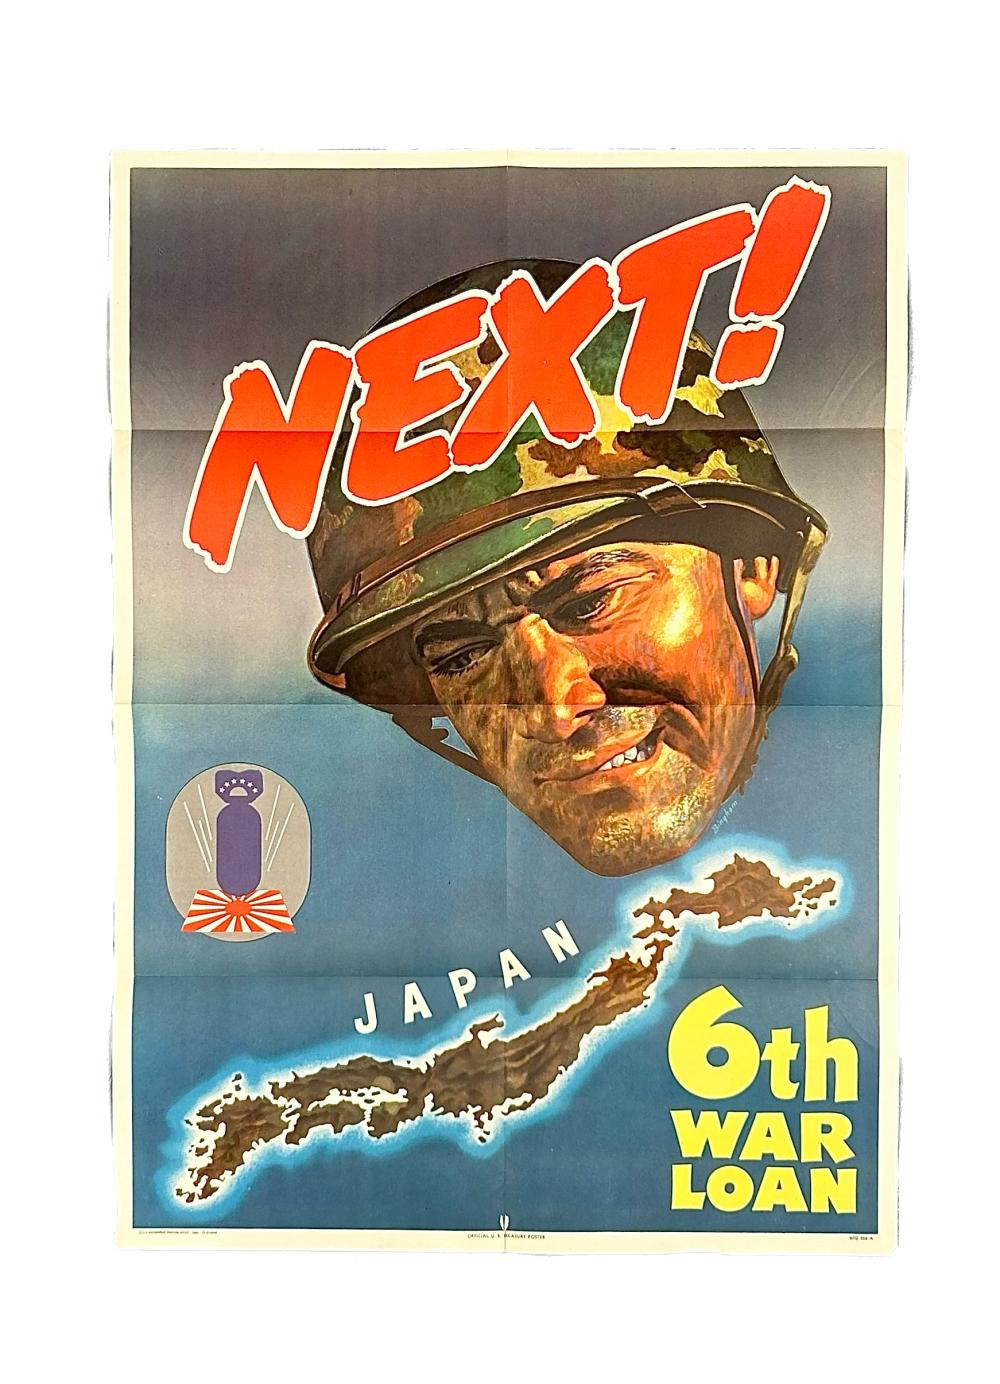 "NEXT! JAPAN" WORLD WAR II-ERA